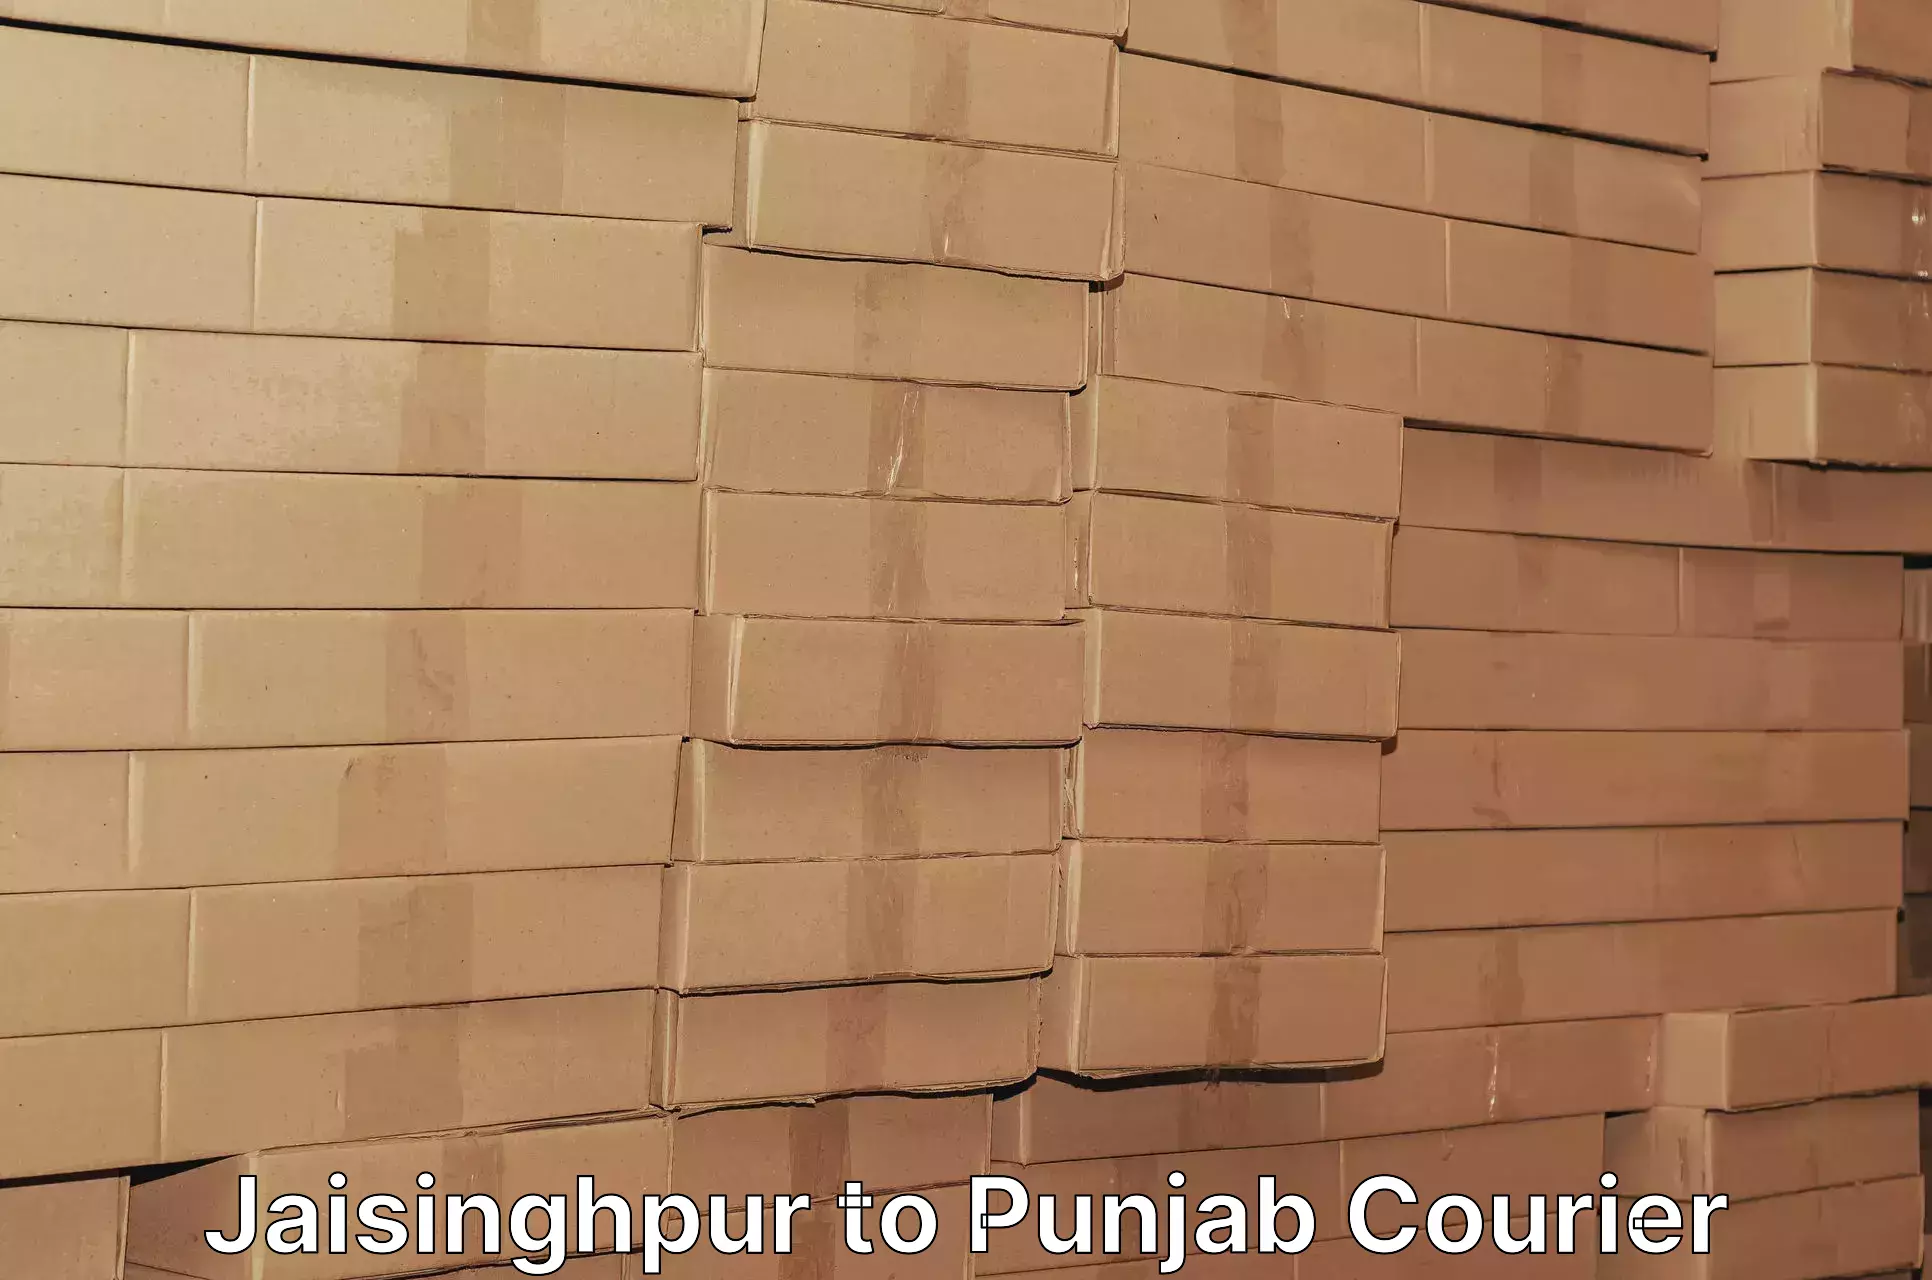 Courier service innovation Jaisinghpur to Machhiwara